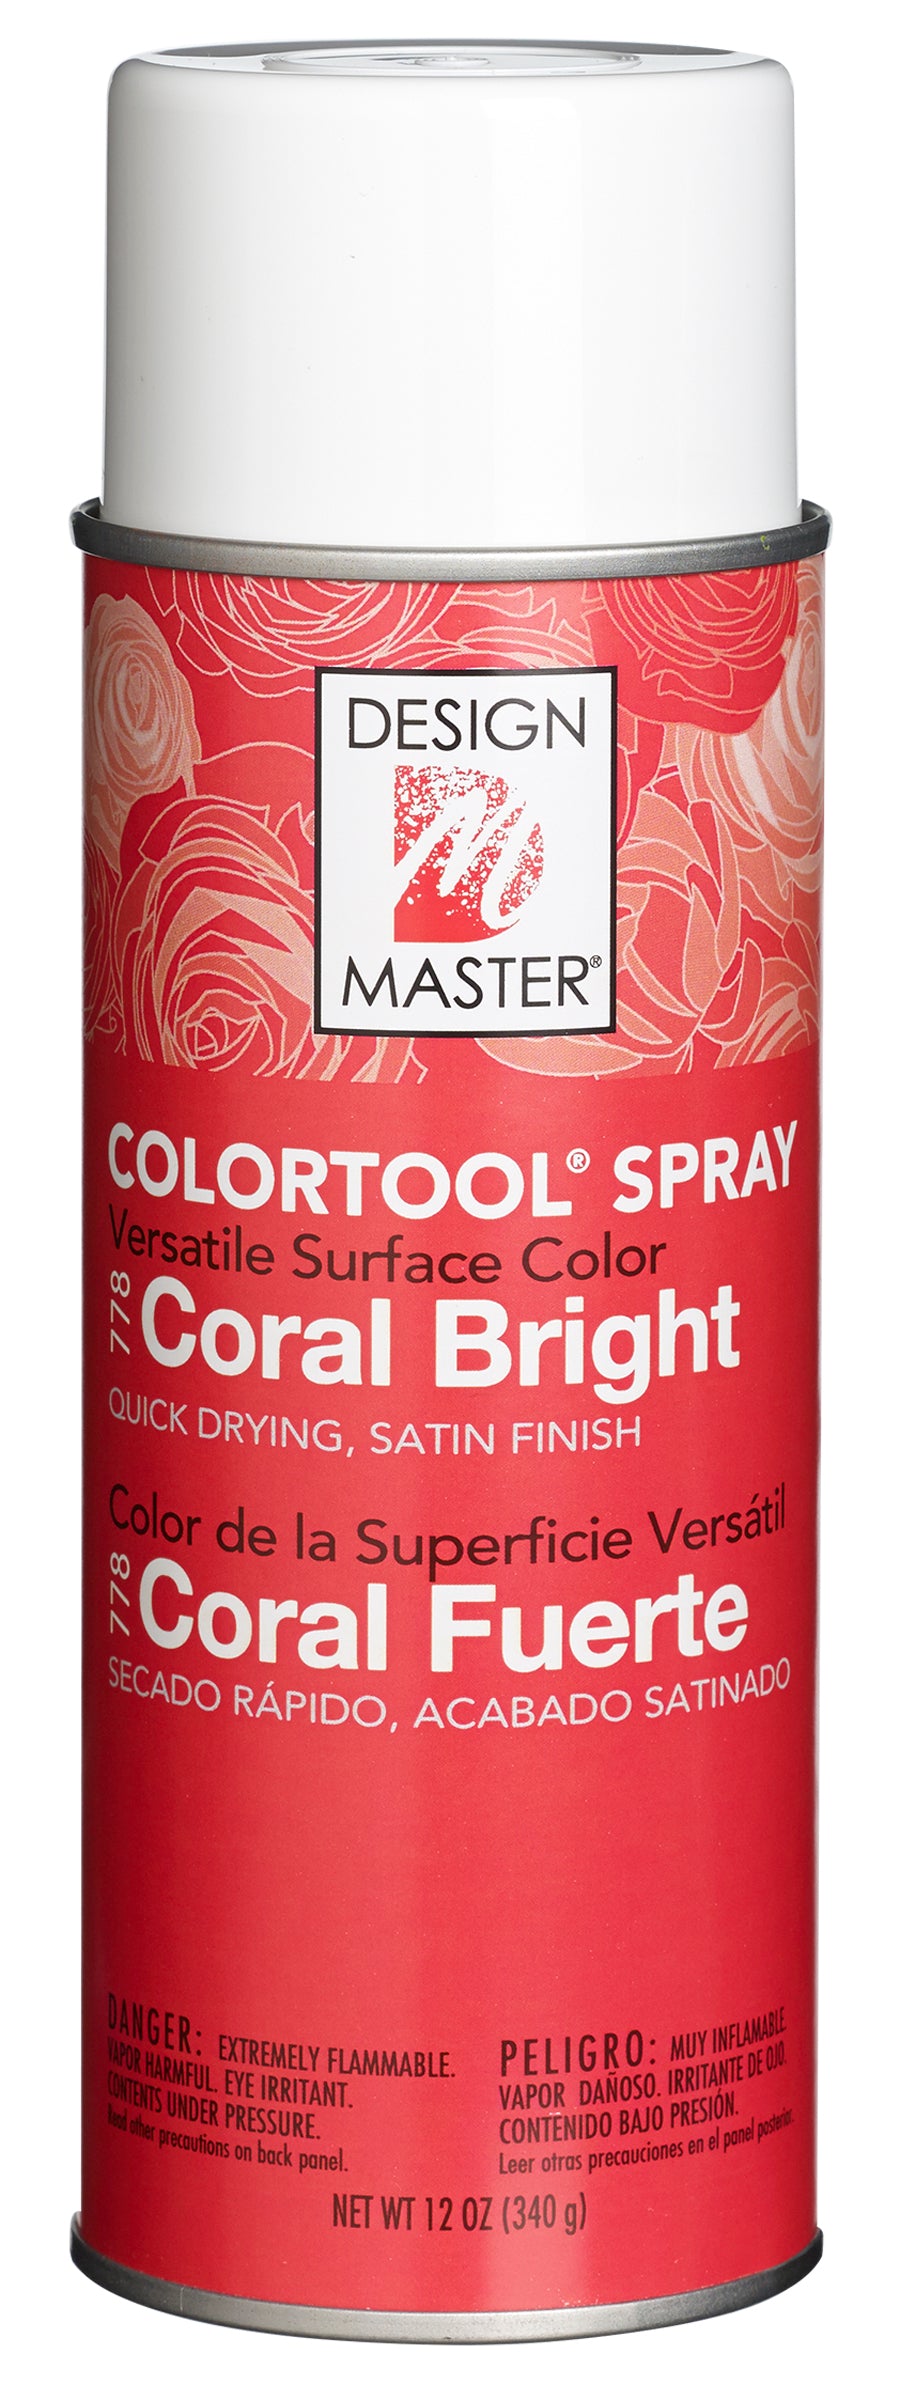 Design Master Colortool Spray-Coral Bright